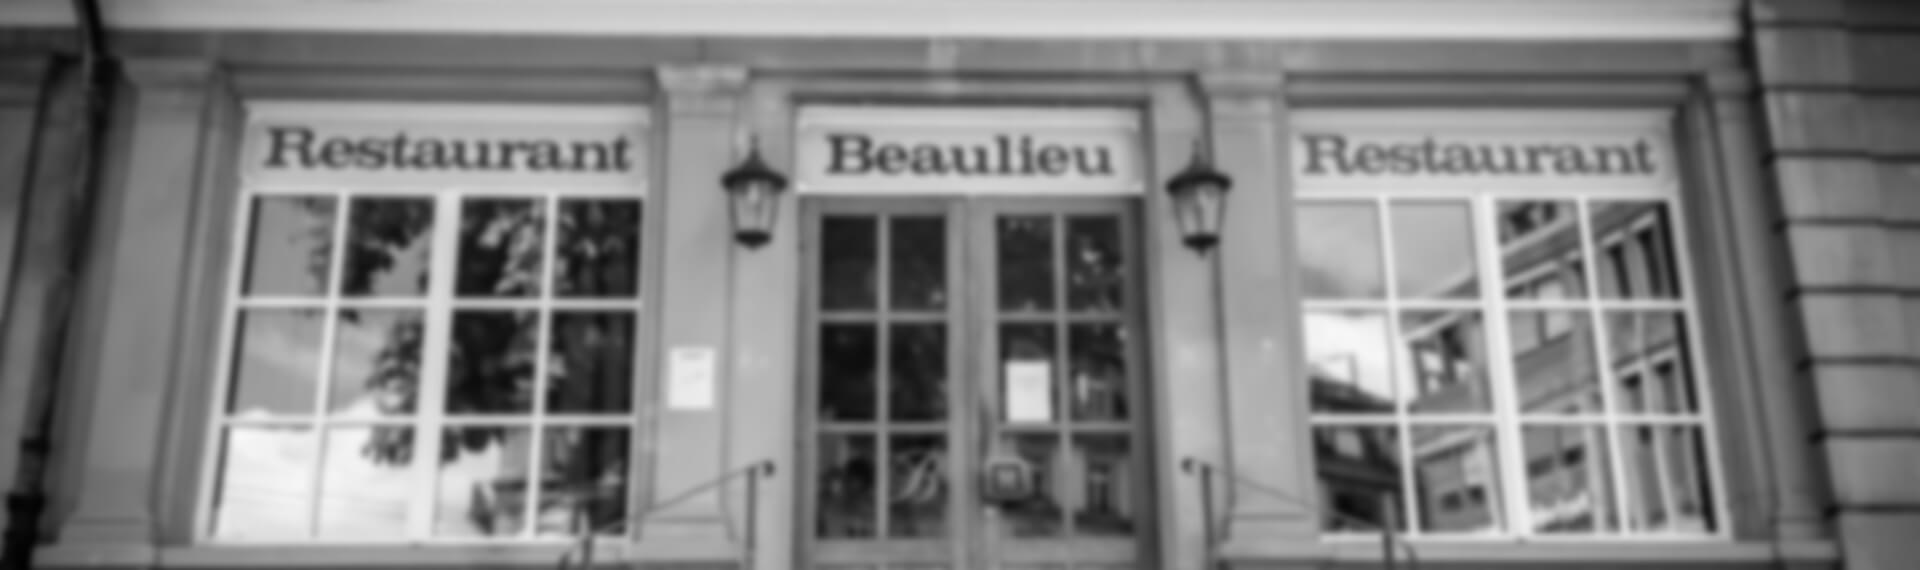 Stoto - Restaurant Beaulieu